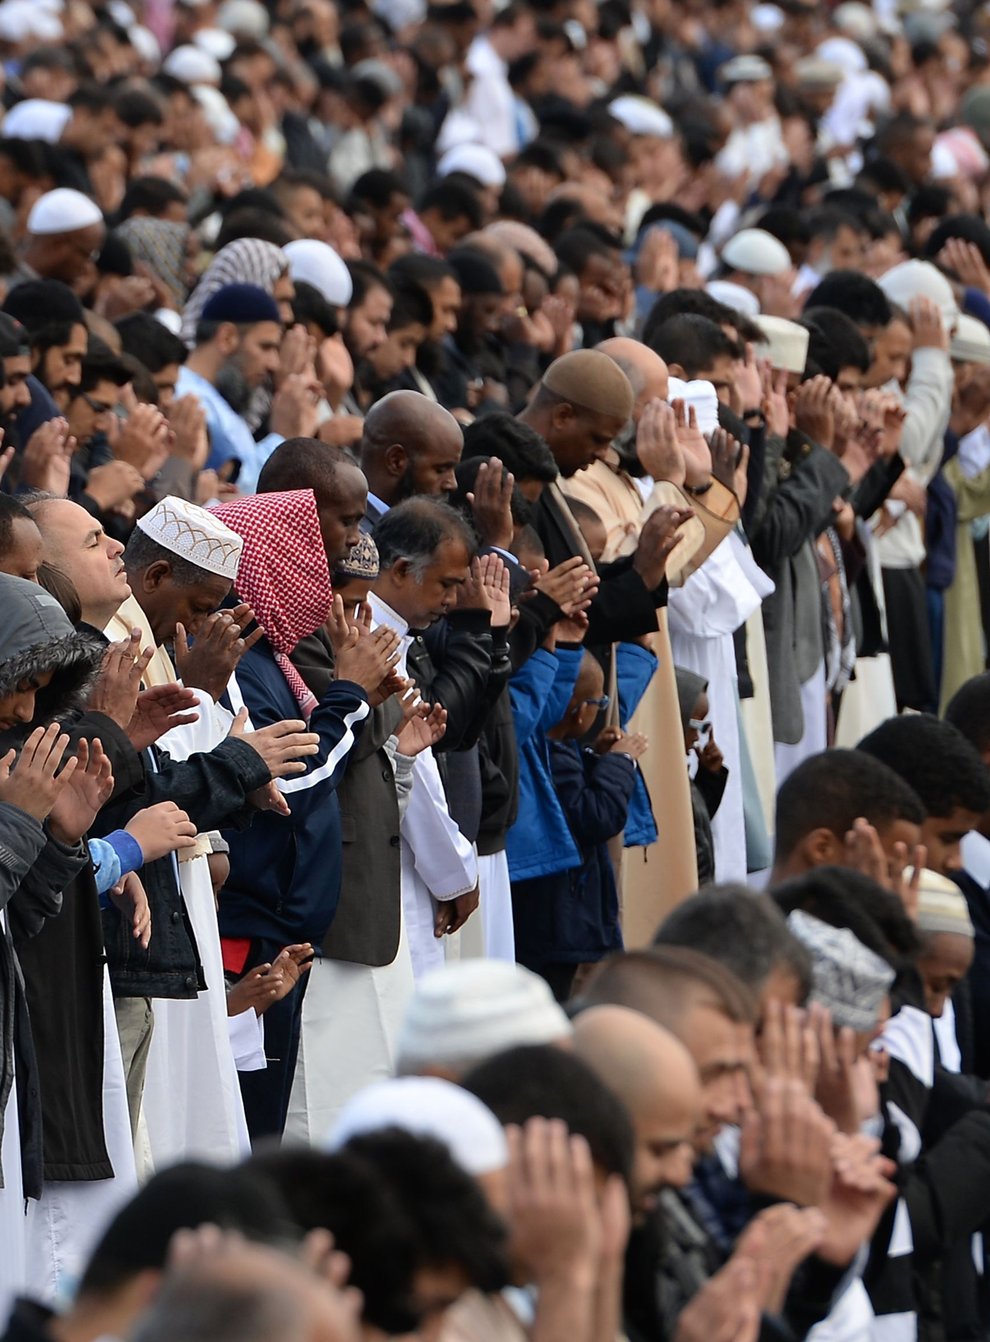 Muslim worshippers in prayer